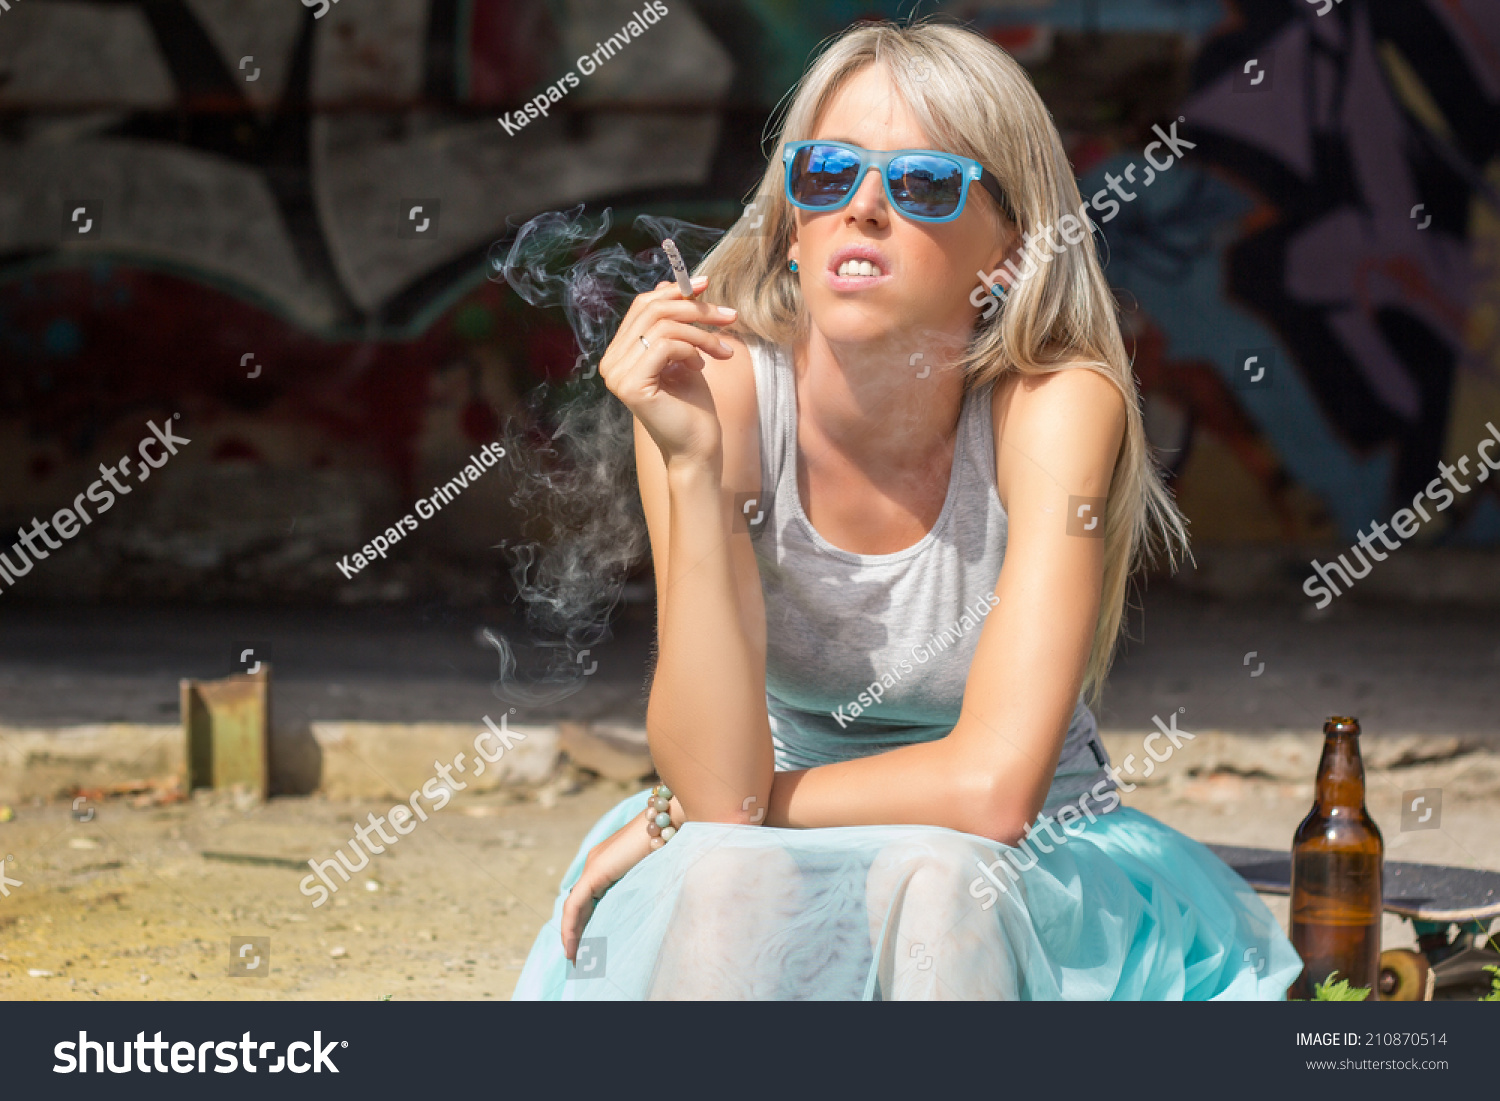 Many Young Urban Girls Today Smoke